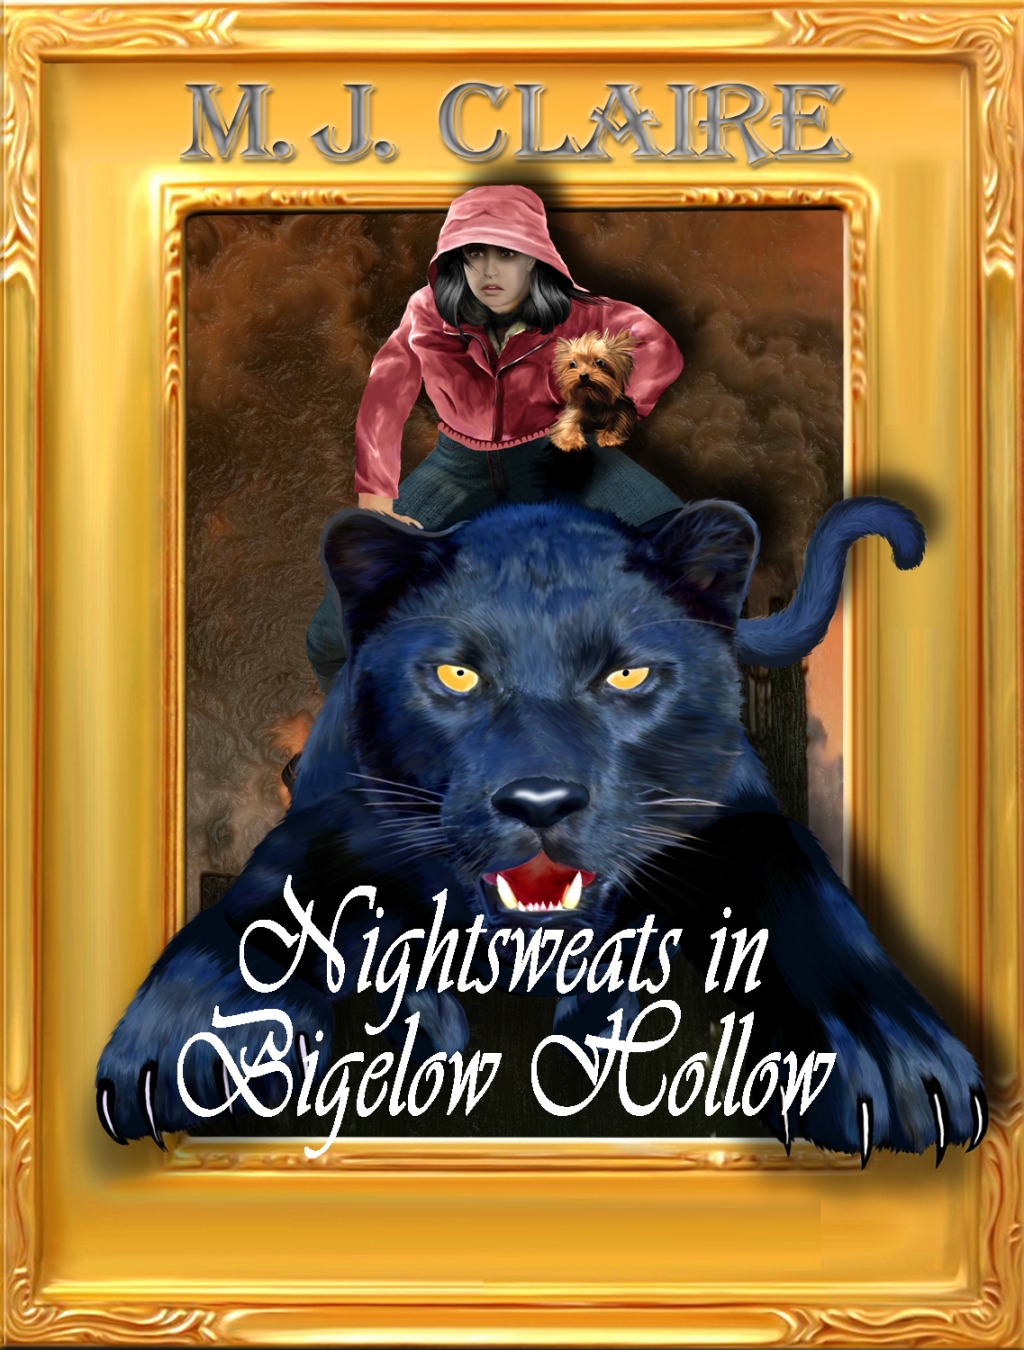 Nightsweats in Bigelow Hollow